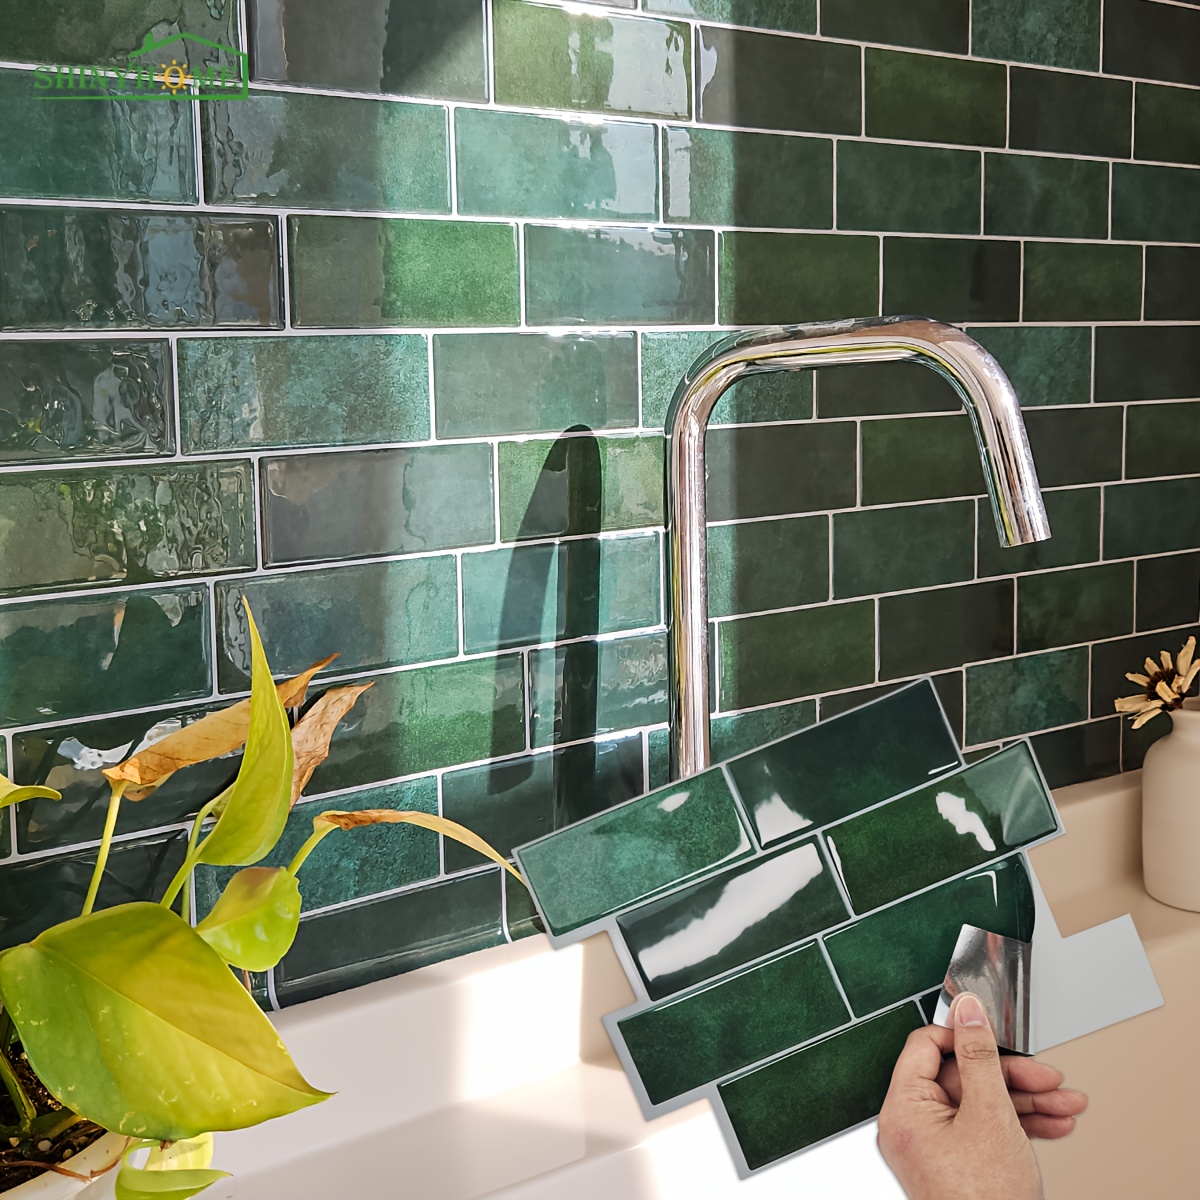 

1/10pcs Green Brick Pattern Tile Self-adhesive Wall Stickers, Waterproof Heat-resistant, Peel And Stick Panels For Living Room Kitchen Backsplash Bathroom Home